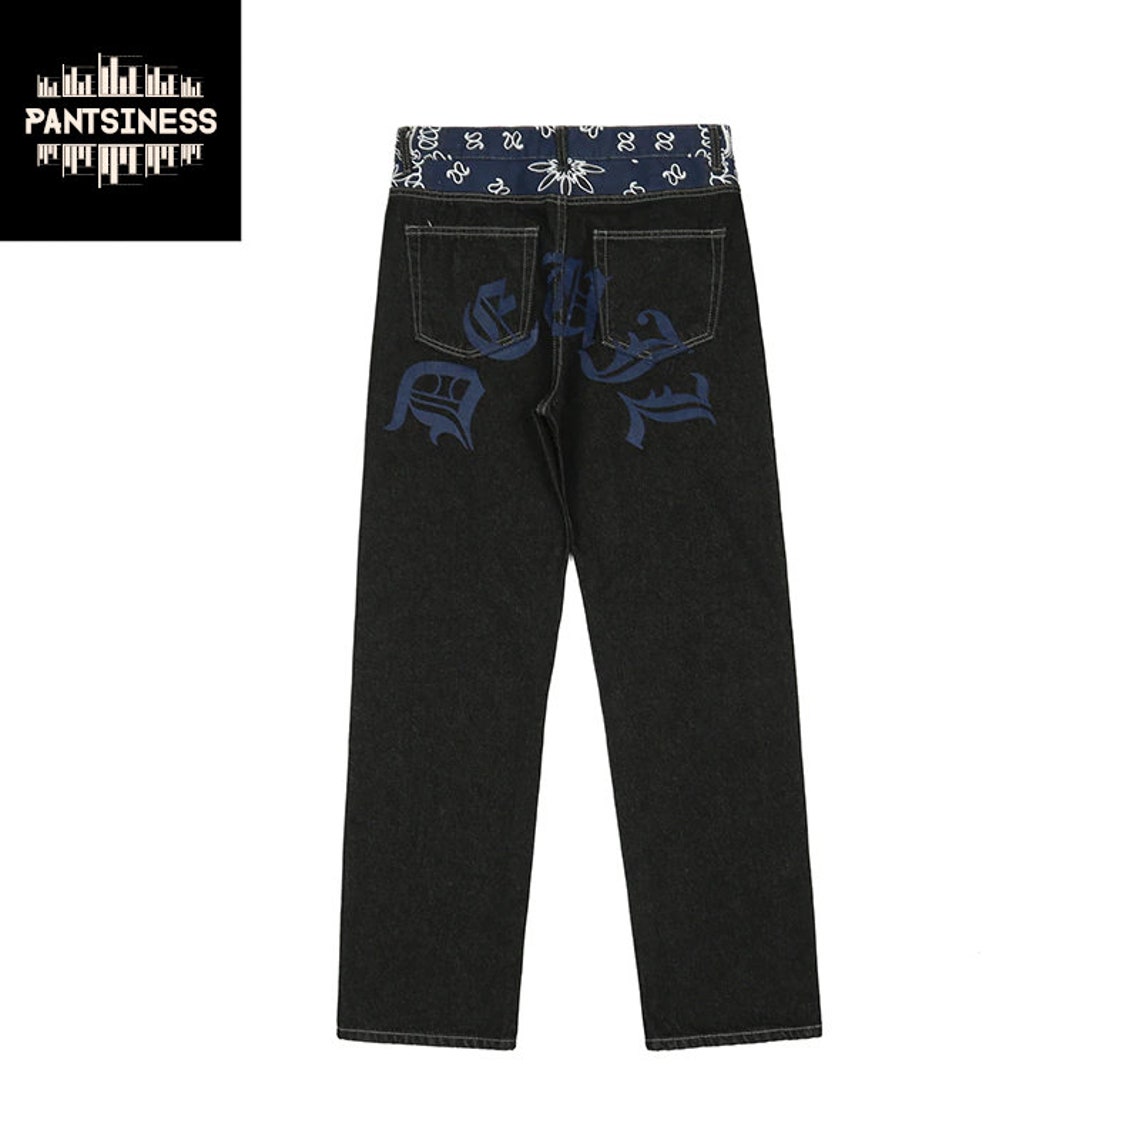 Retro Y2K Printed Jeans Gangster Style Hip Hop Pants Devil - Etsy